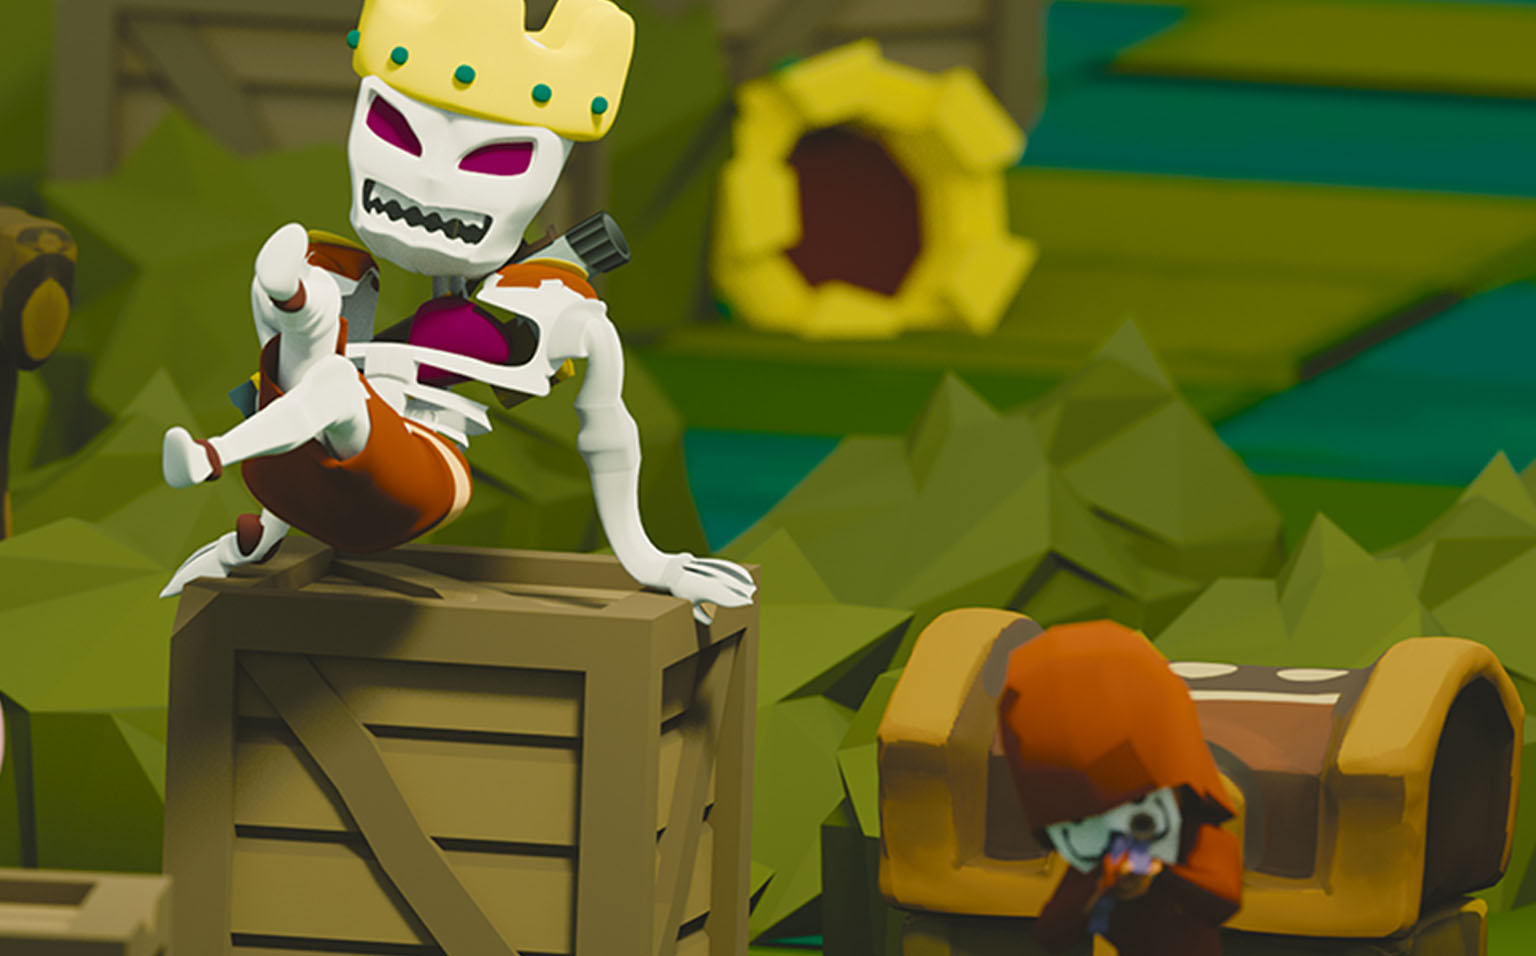 Crown Battles 3v3 game for Android